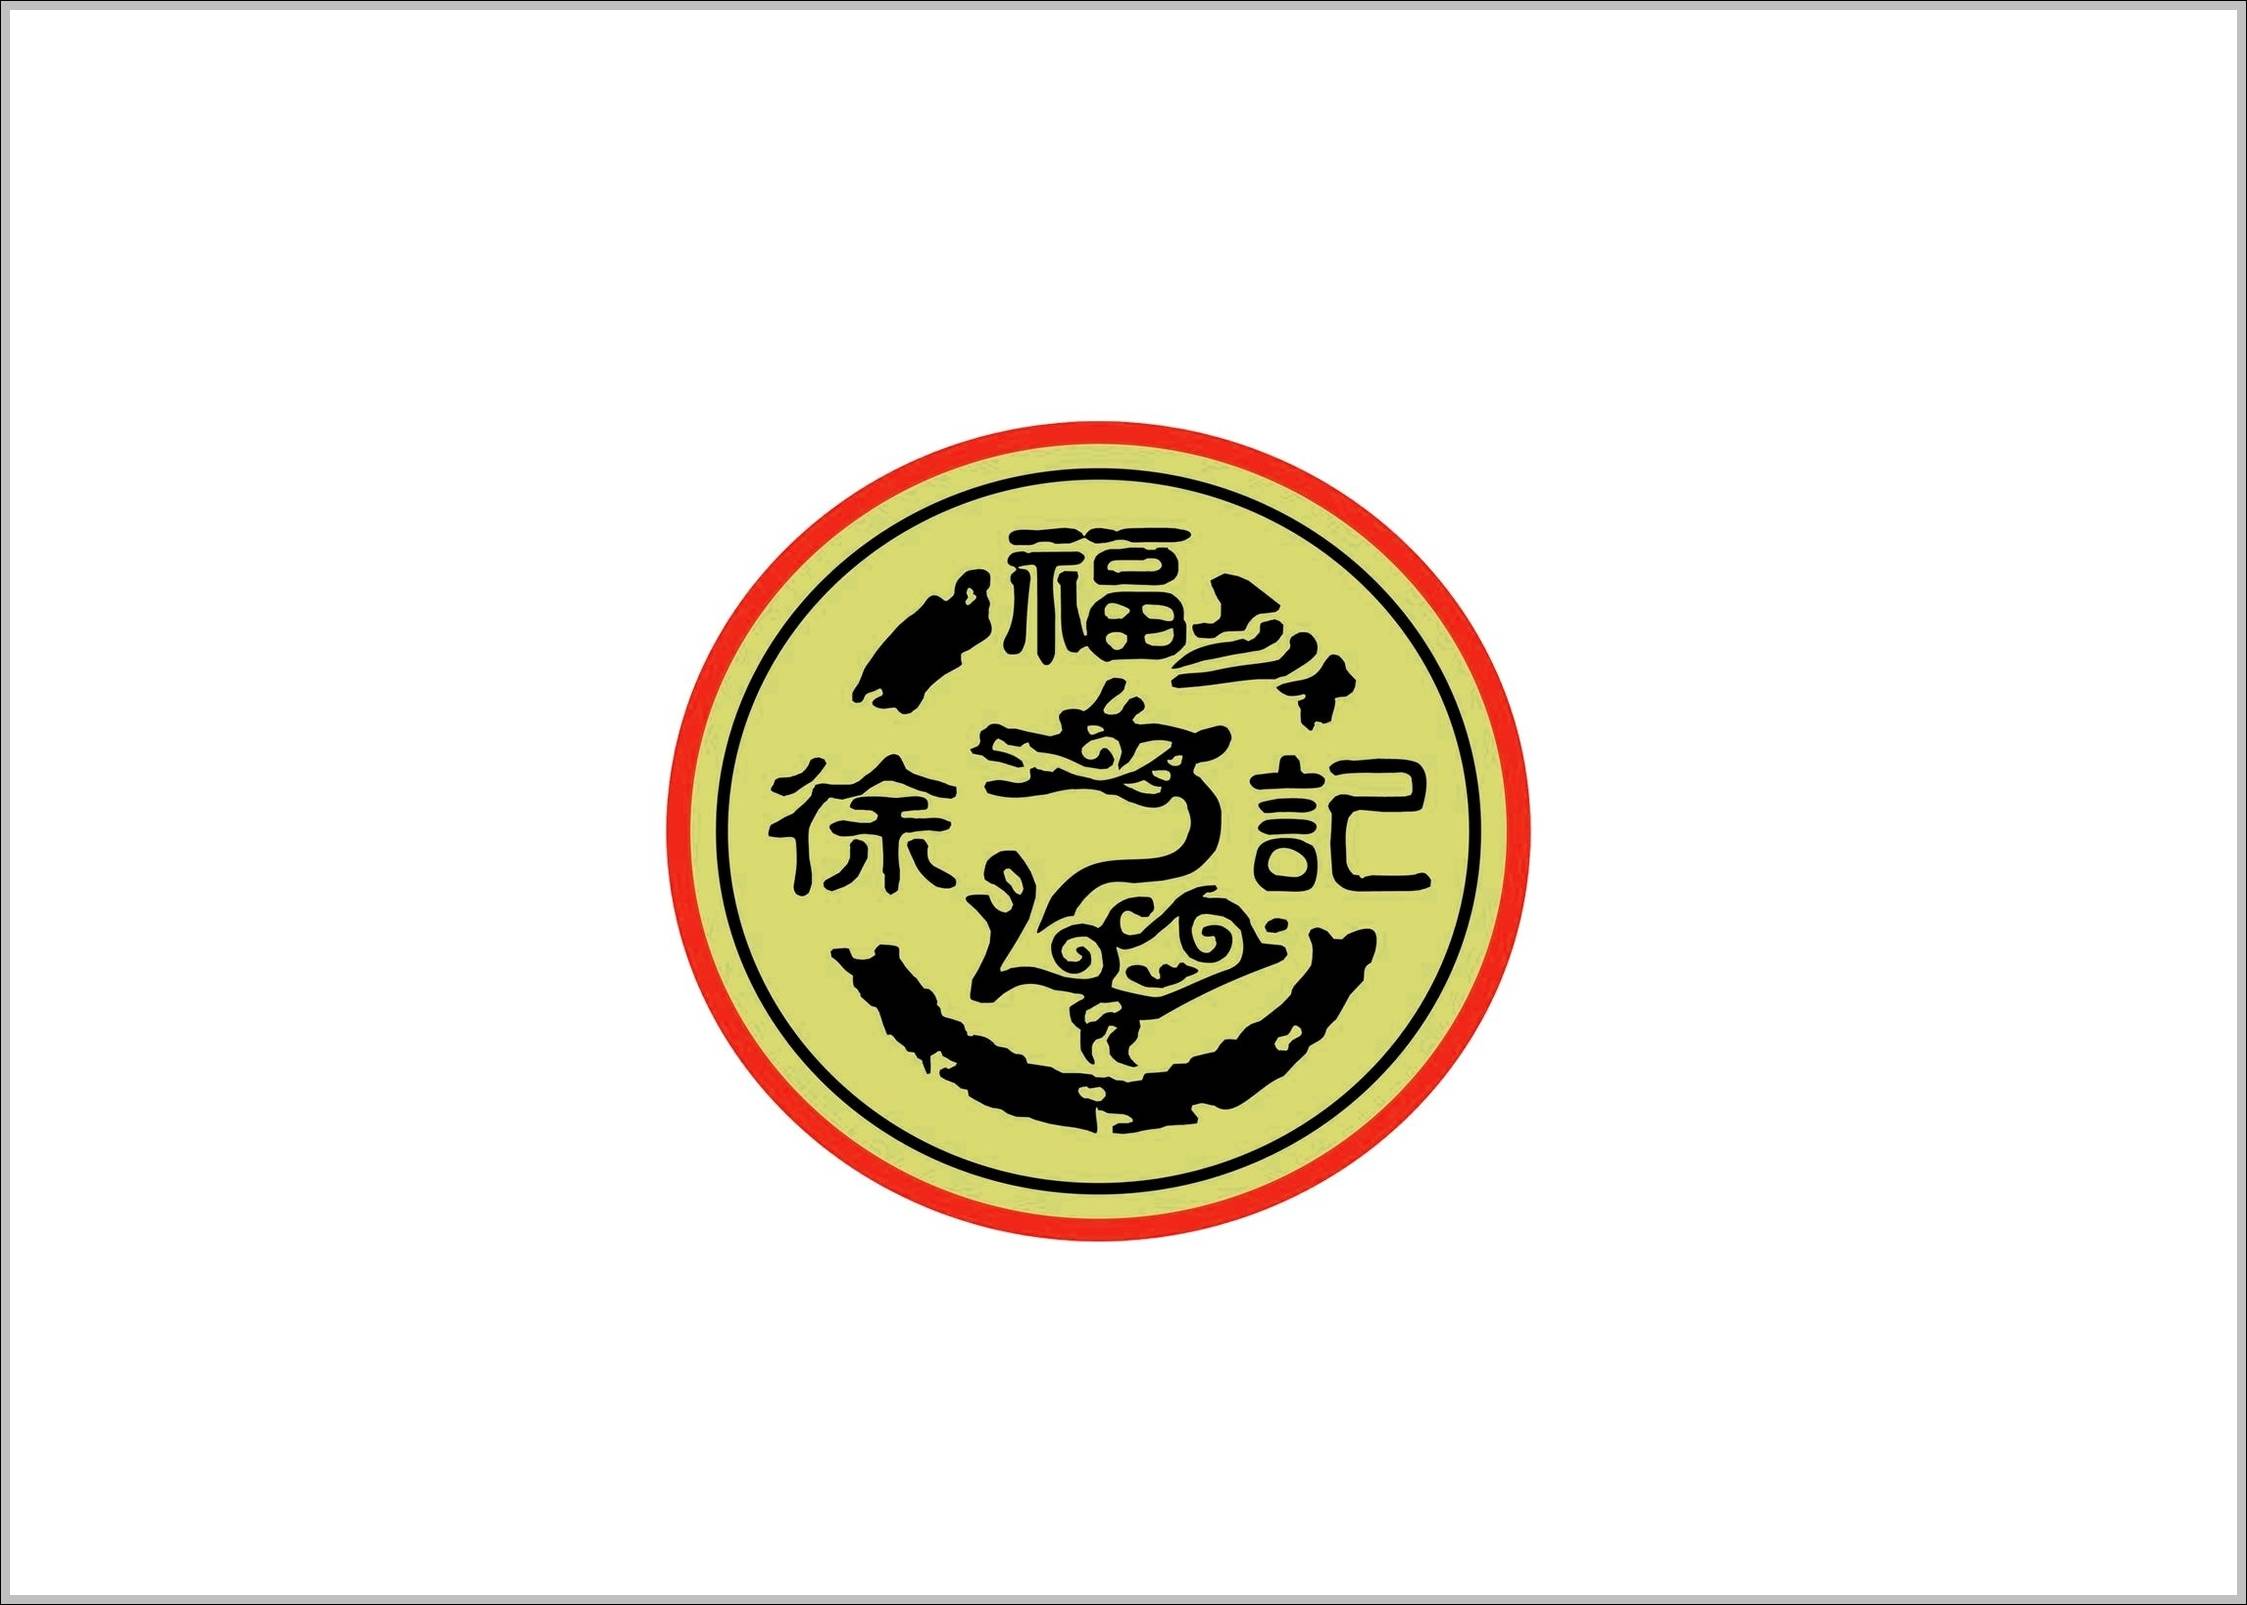 Hsu Fu Chi logo